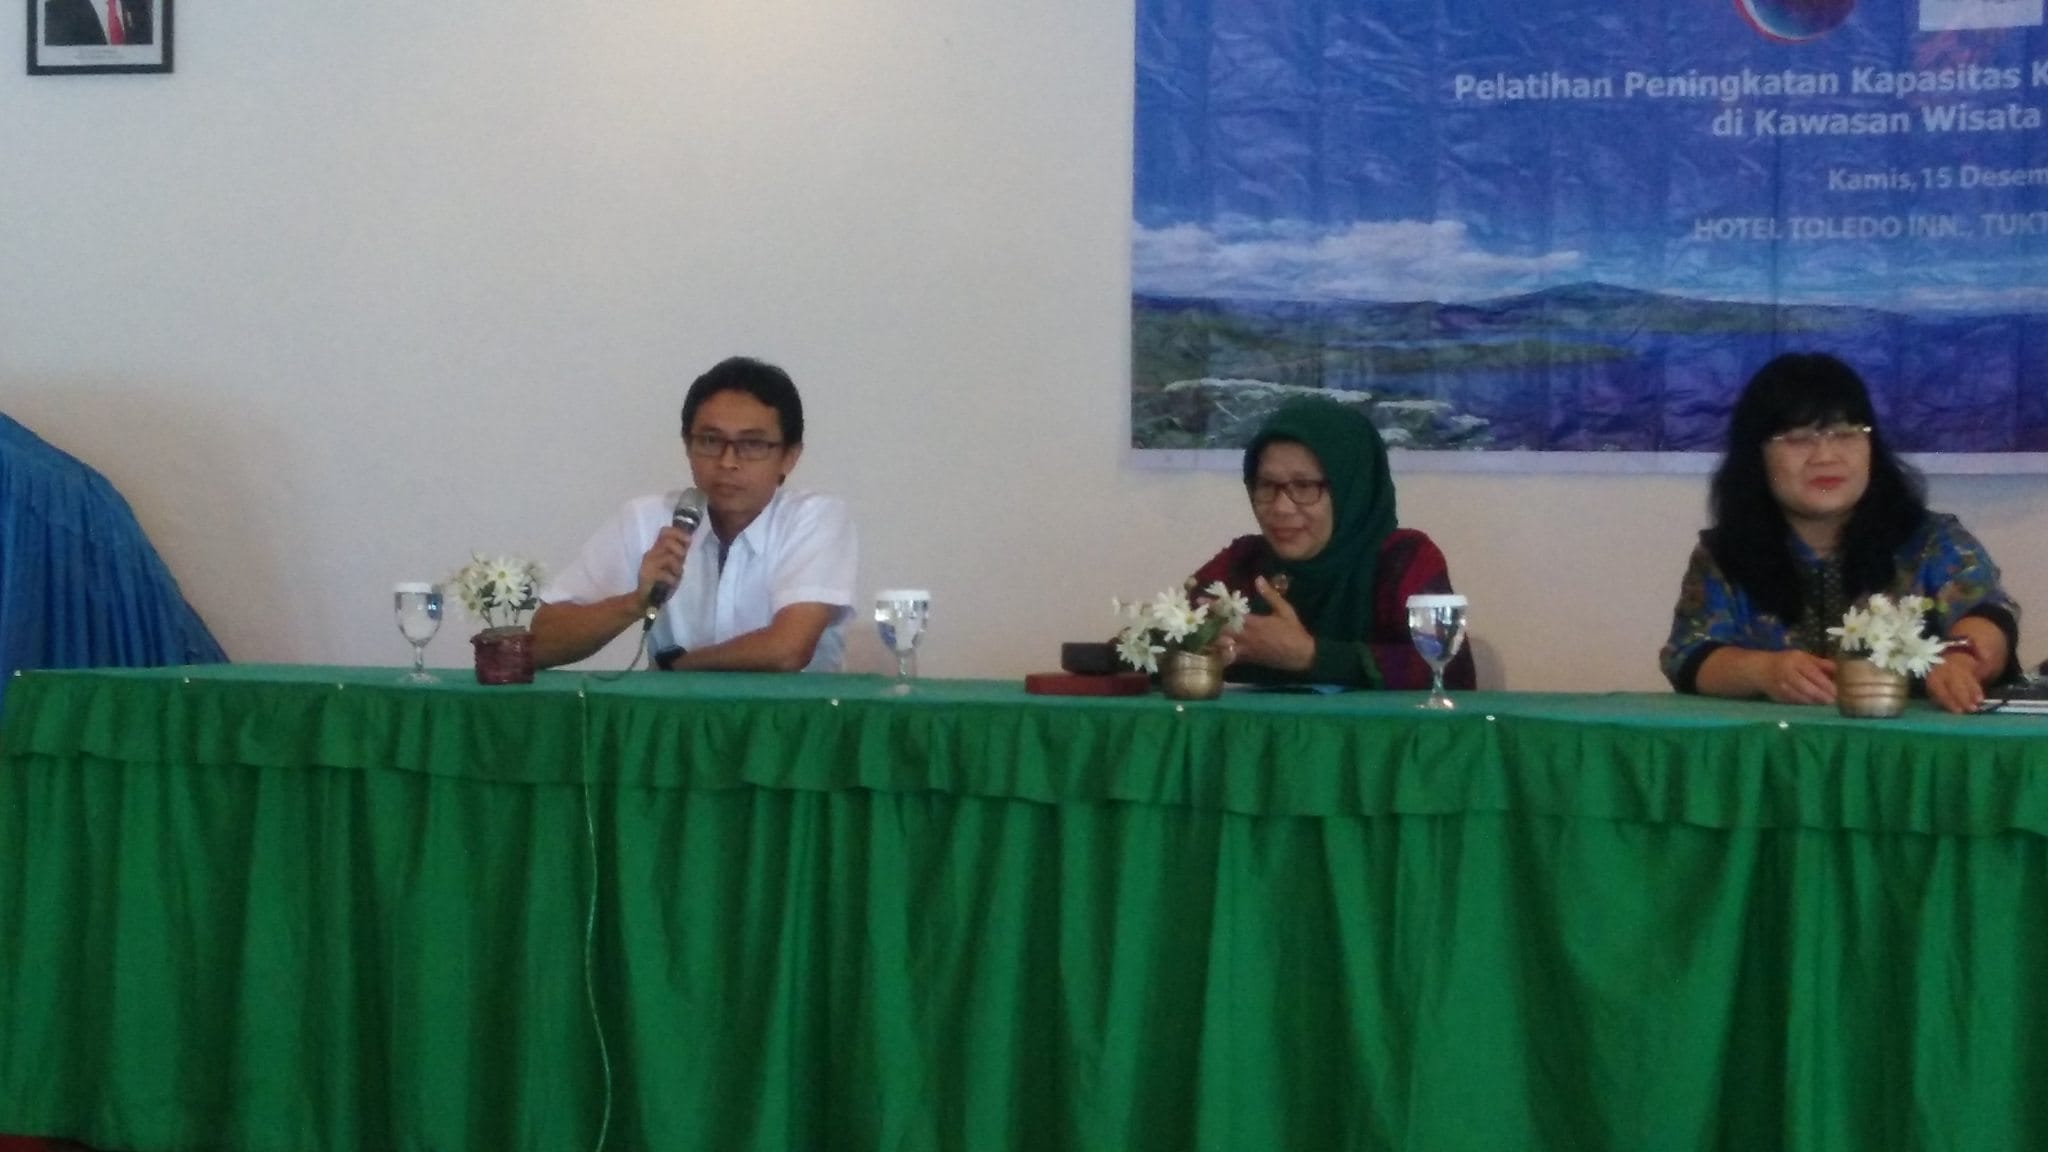 Gandeng Universitas Sumatera Utara, Kemenko Kemaritiman Adakan Pelatihan Komunikasi Bagi Masyarakat Wisata Samosir